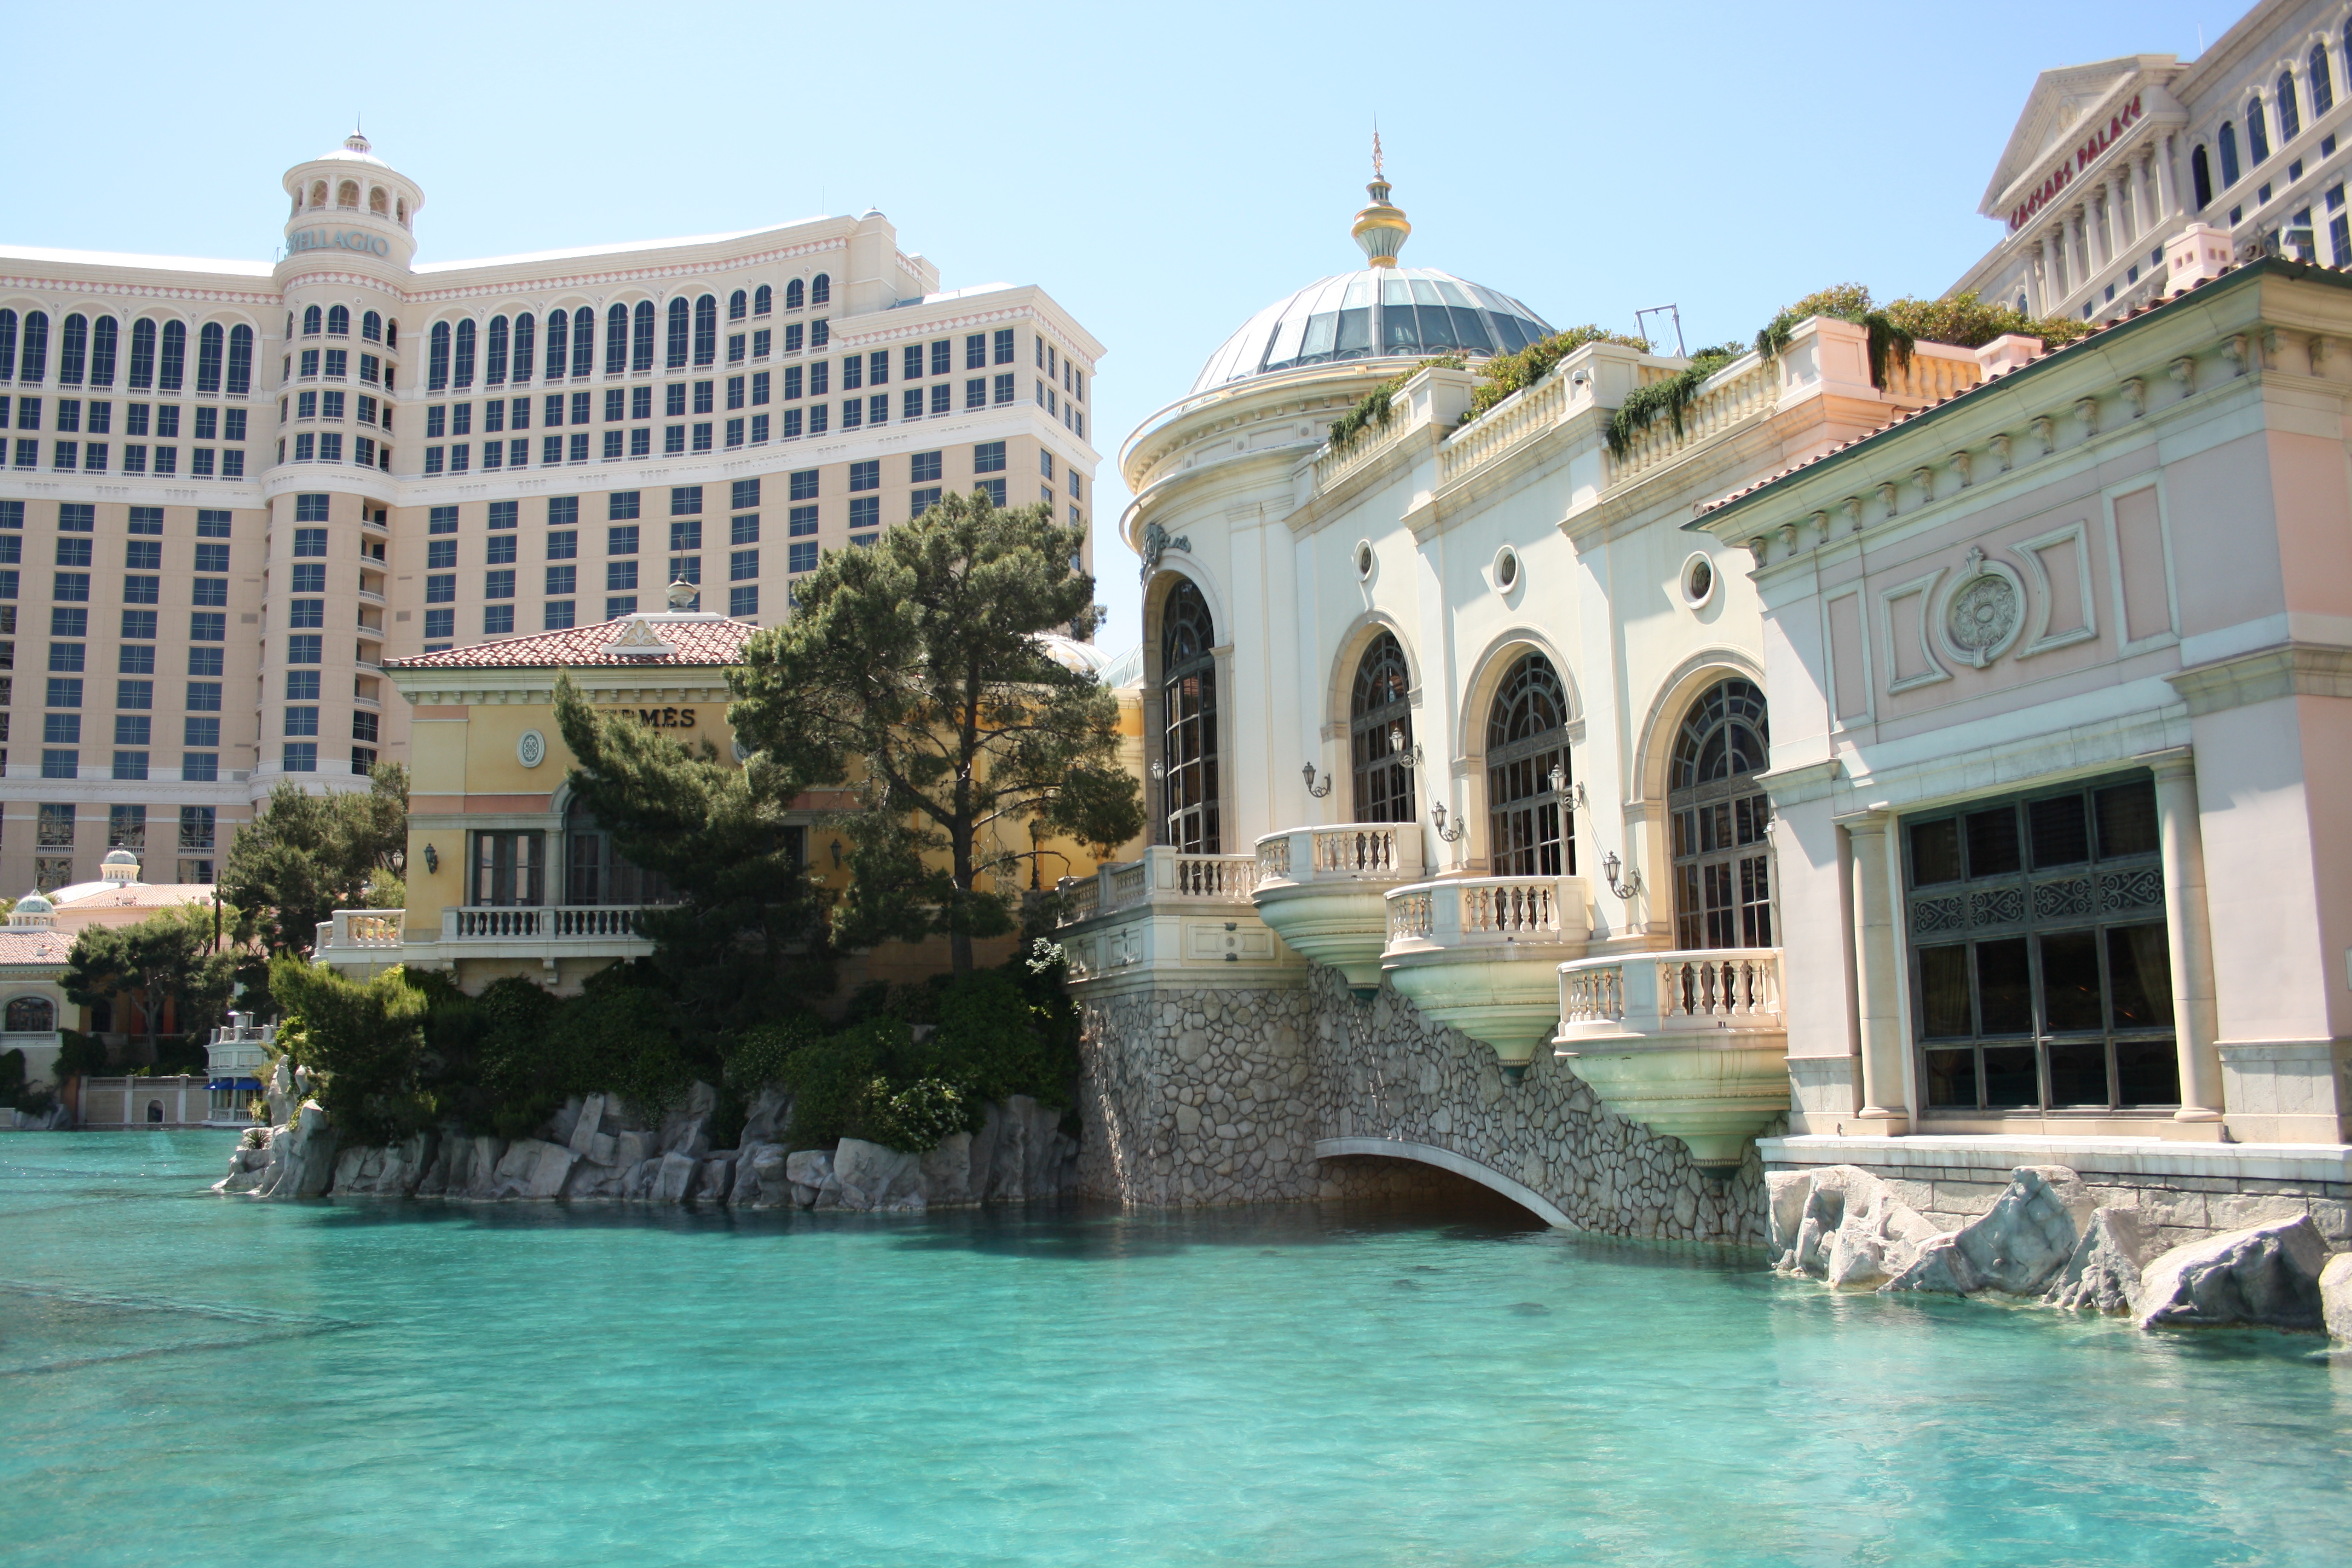 Hotel Bellagio, Las Vegas Strip, Las Vegas, Nevada, United States